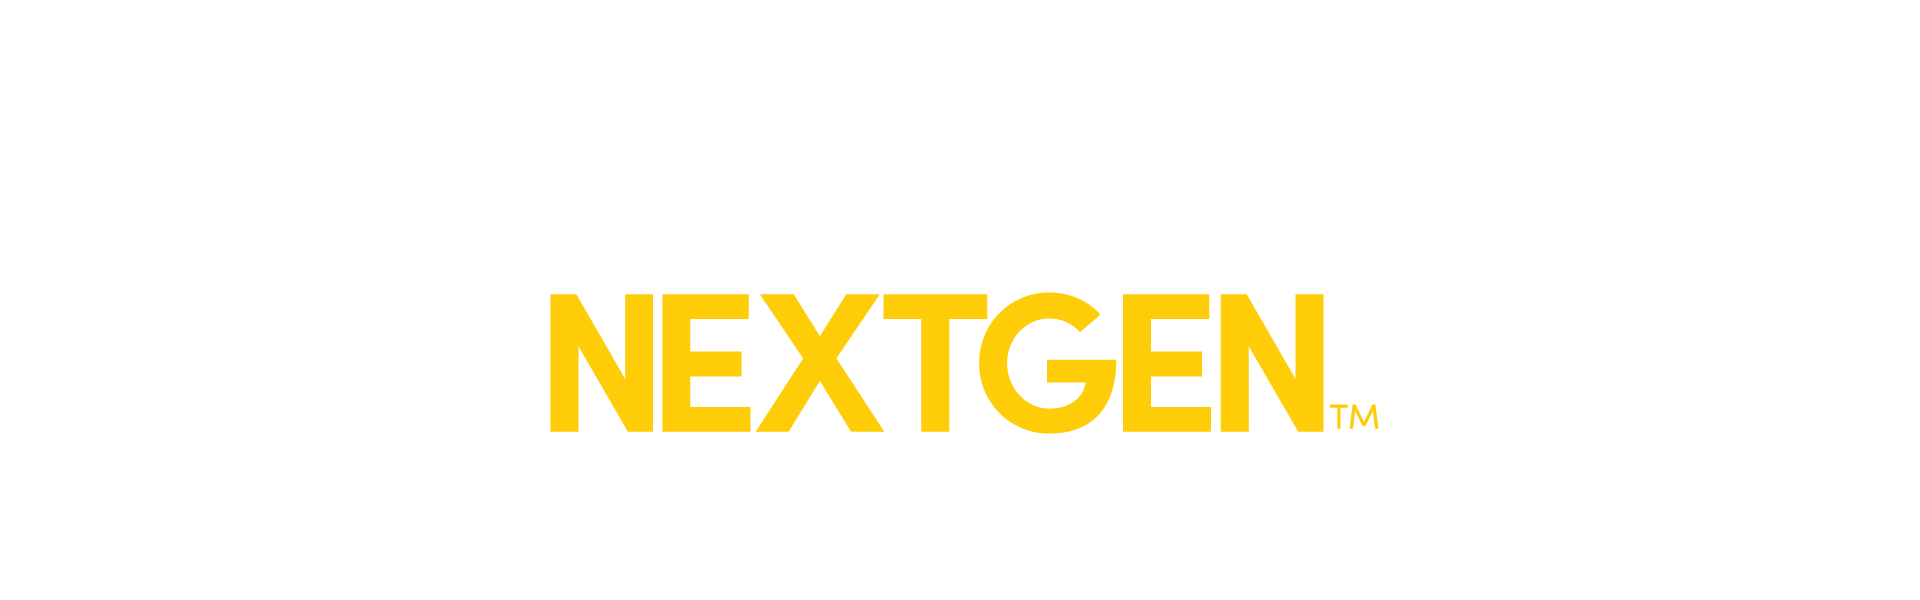 RIMS NextGen Webinar Series